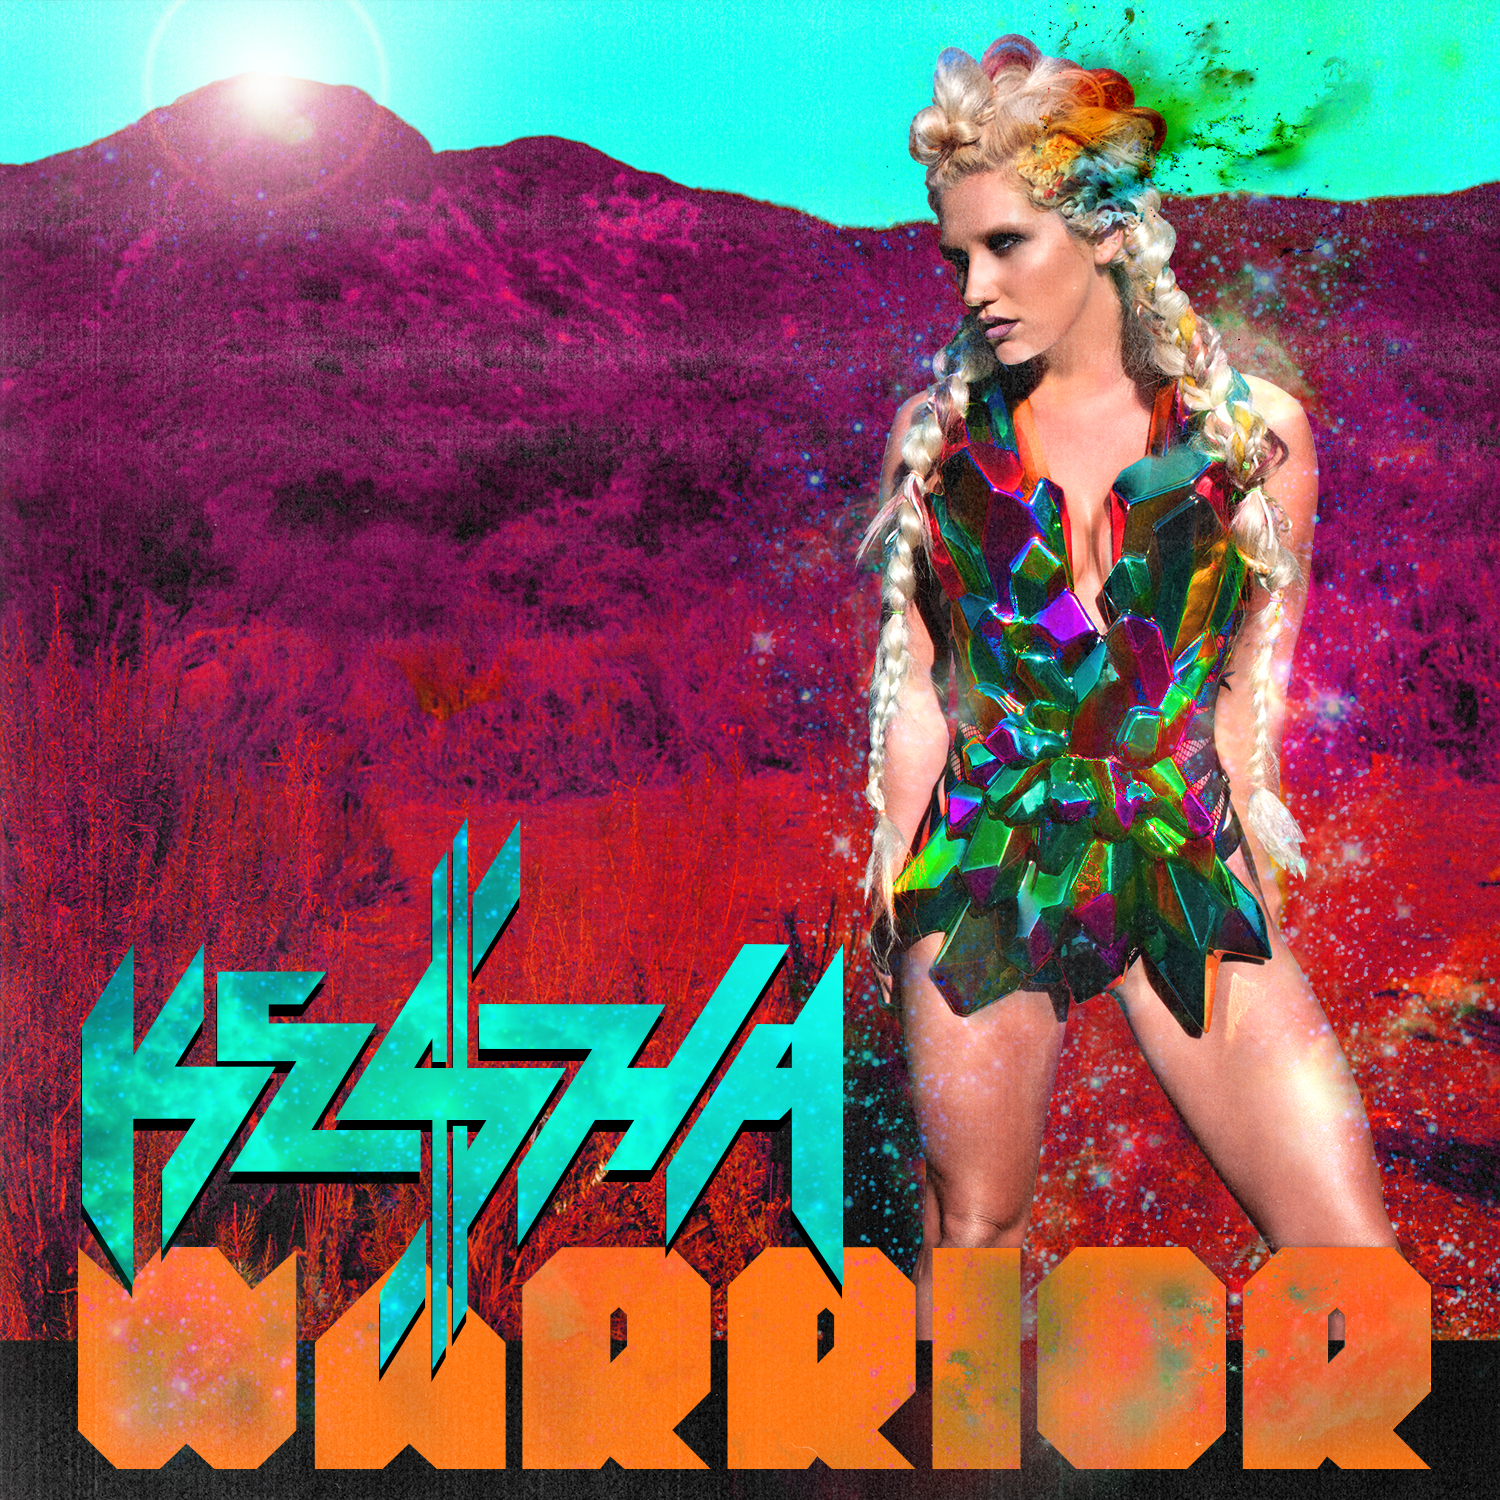 http://2.bp.blogspot.com/-w-F3ymNnD7M/ULgAuUIAupI/AAAAAAAAA18/BbqNQwlvUog/s1600/Keha-Warrior-Album-Cover.jpg